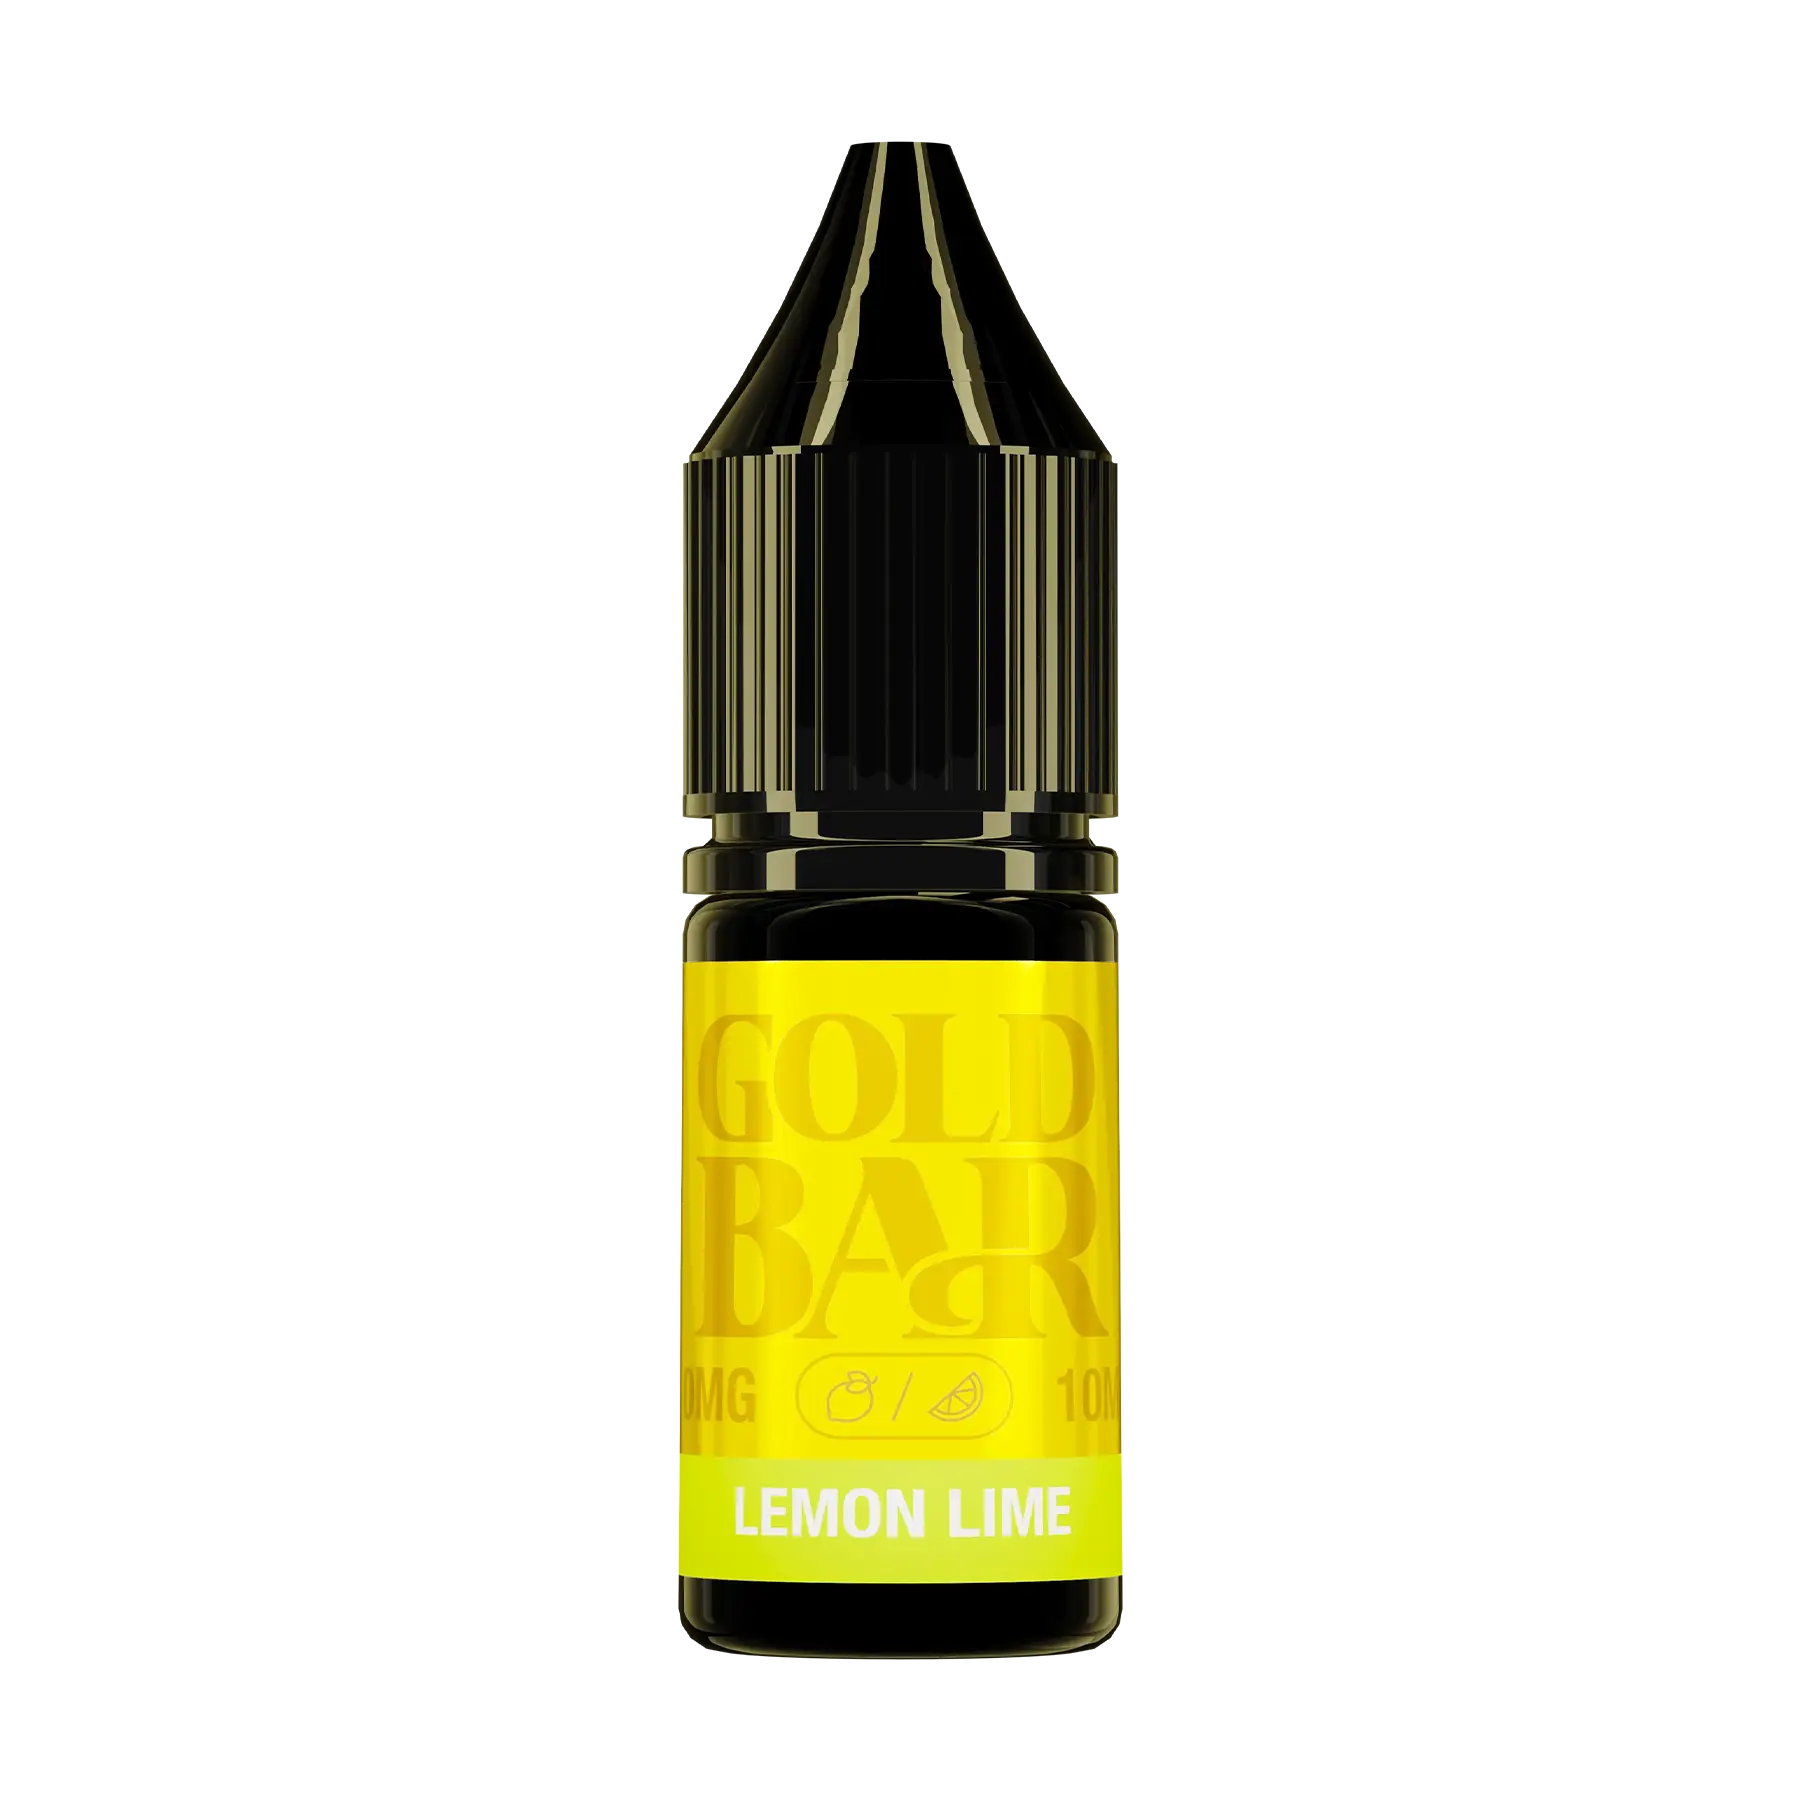 Gold Bar - Lemon Lime 10ml E Liquid Nicotine Salt